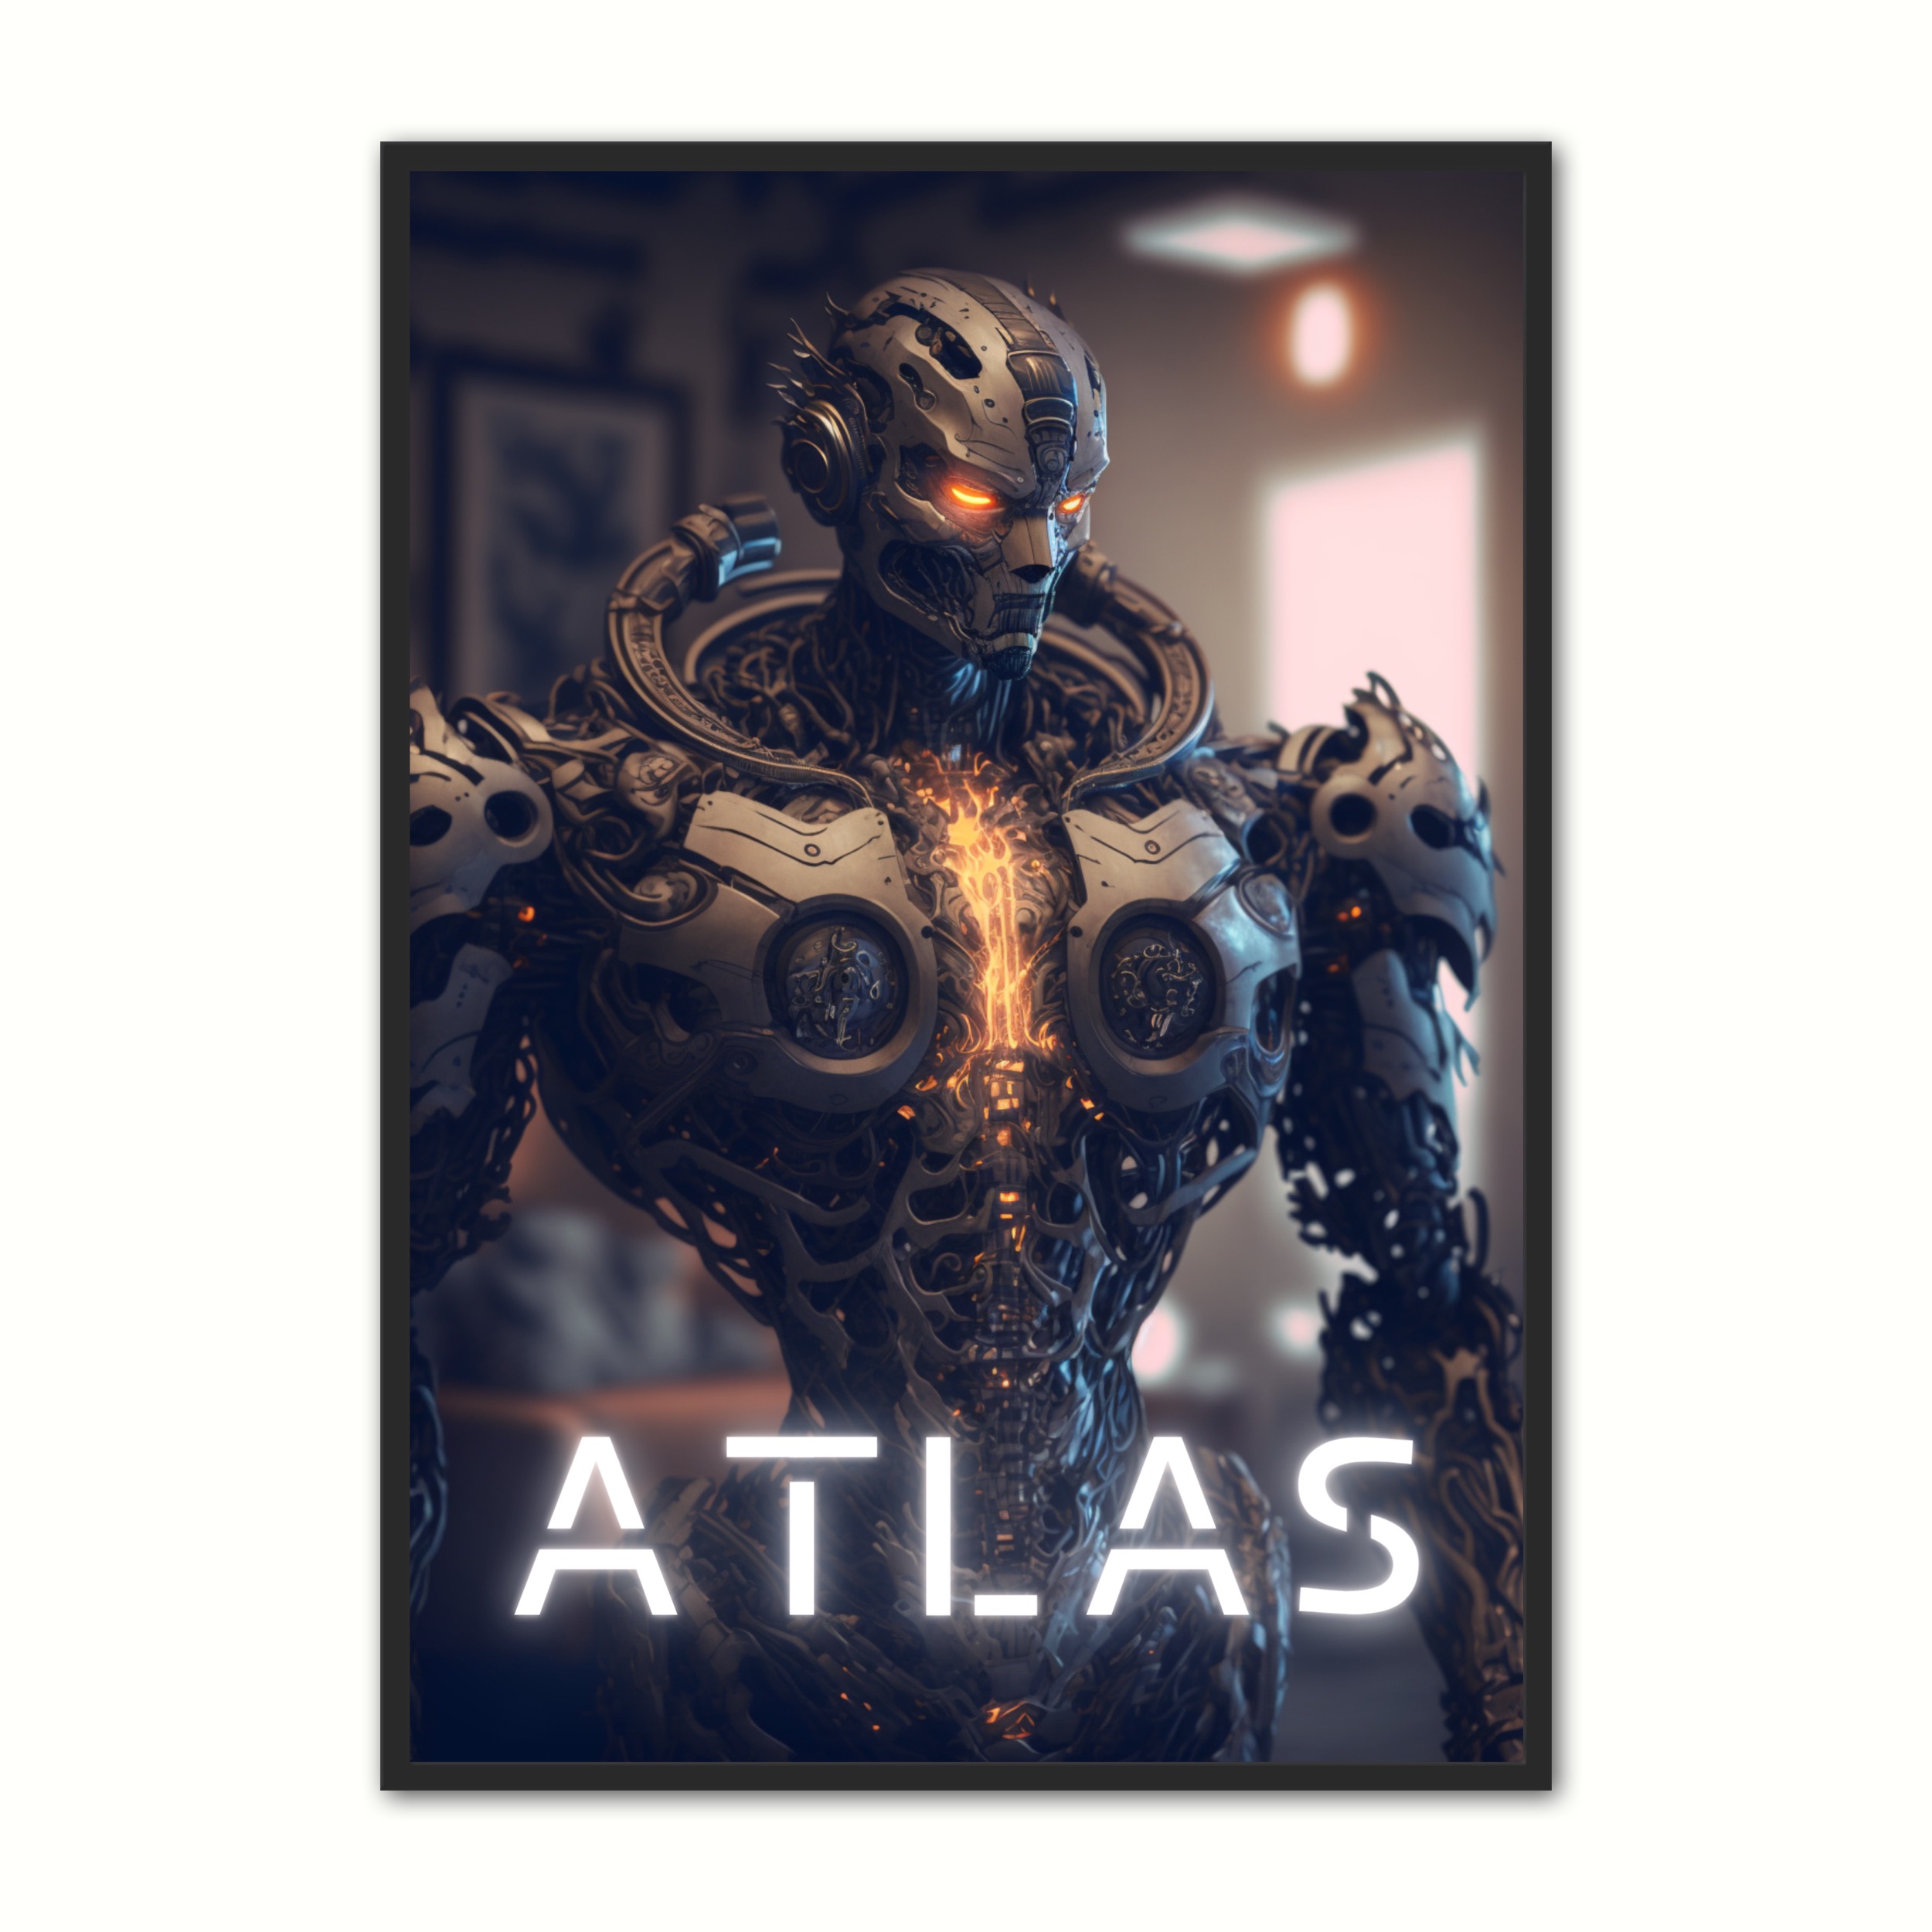 Se Plakat med Atlas - Android 50 x 70 cm (B2) hos Nyplakat.dk